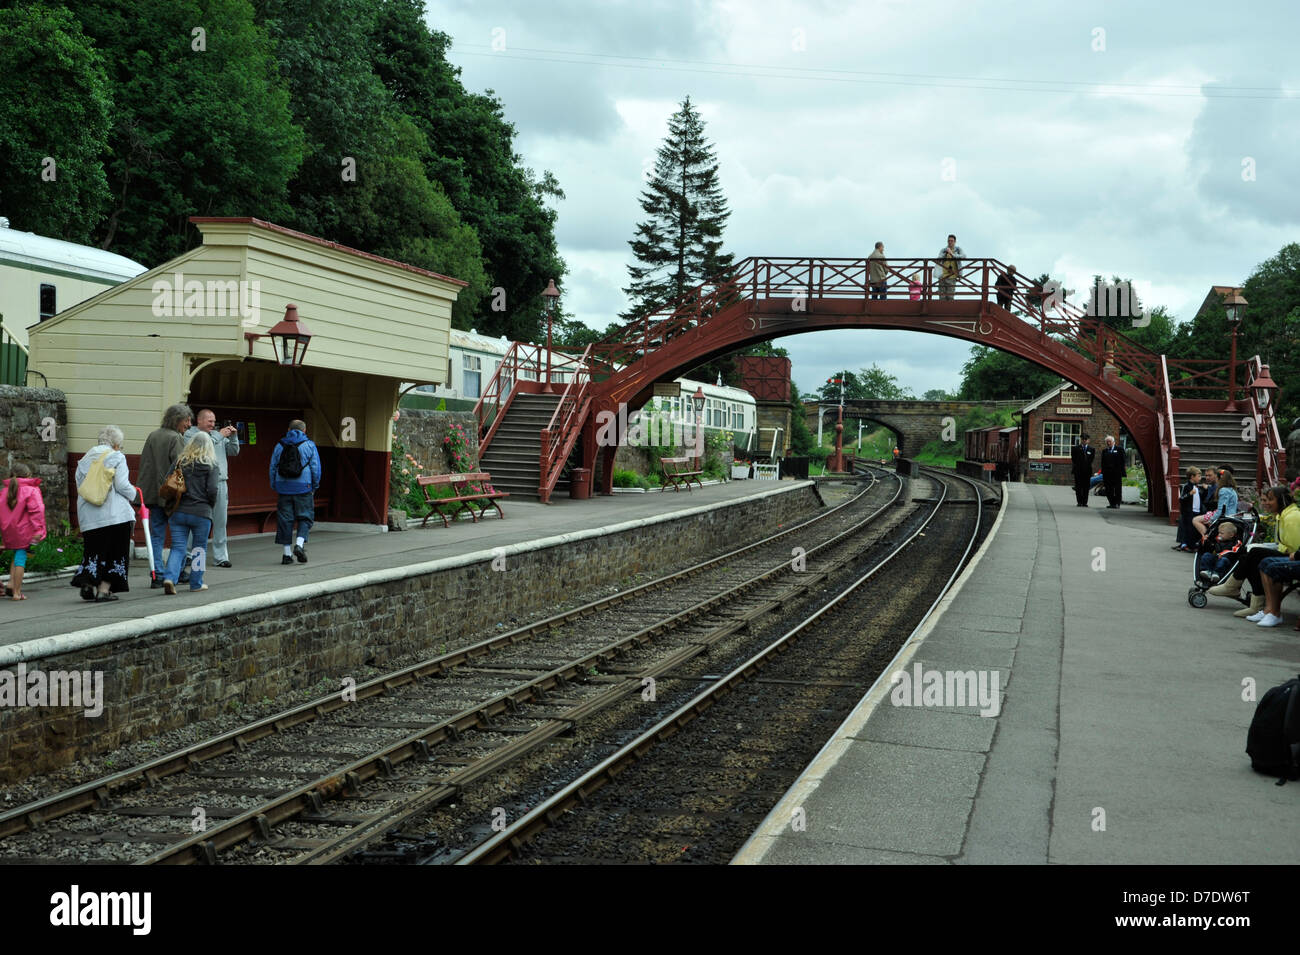 goathland railway station,bridge,people,railway line,trees,platform Stock Photo